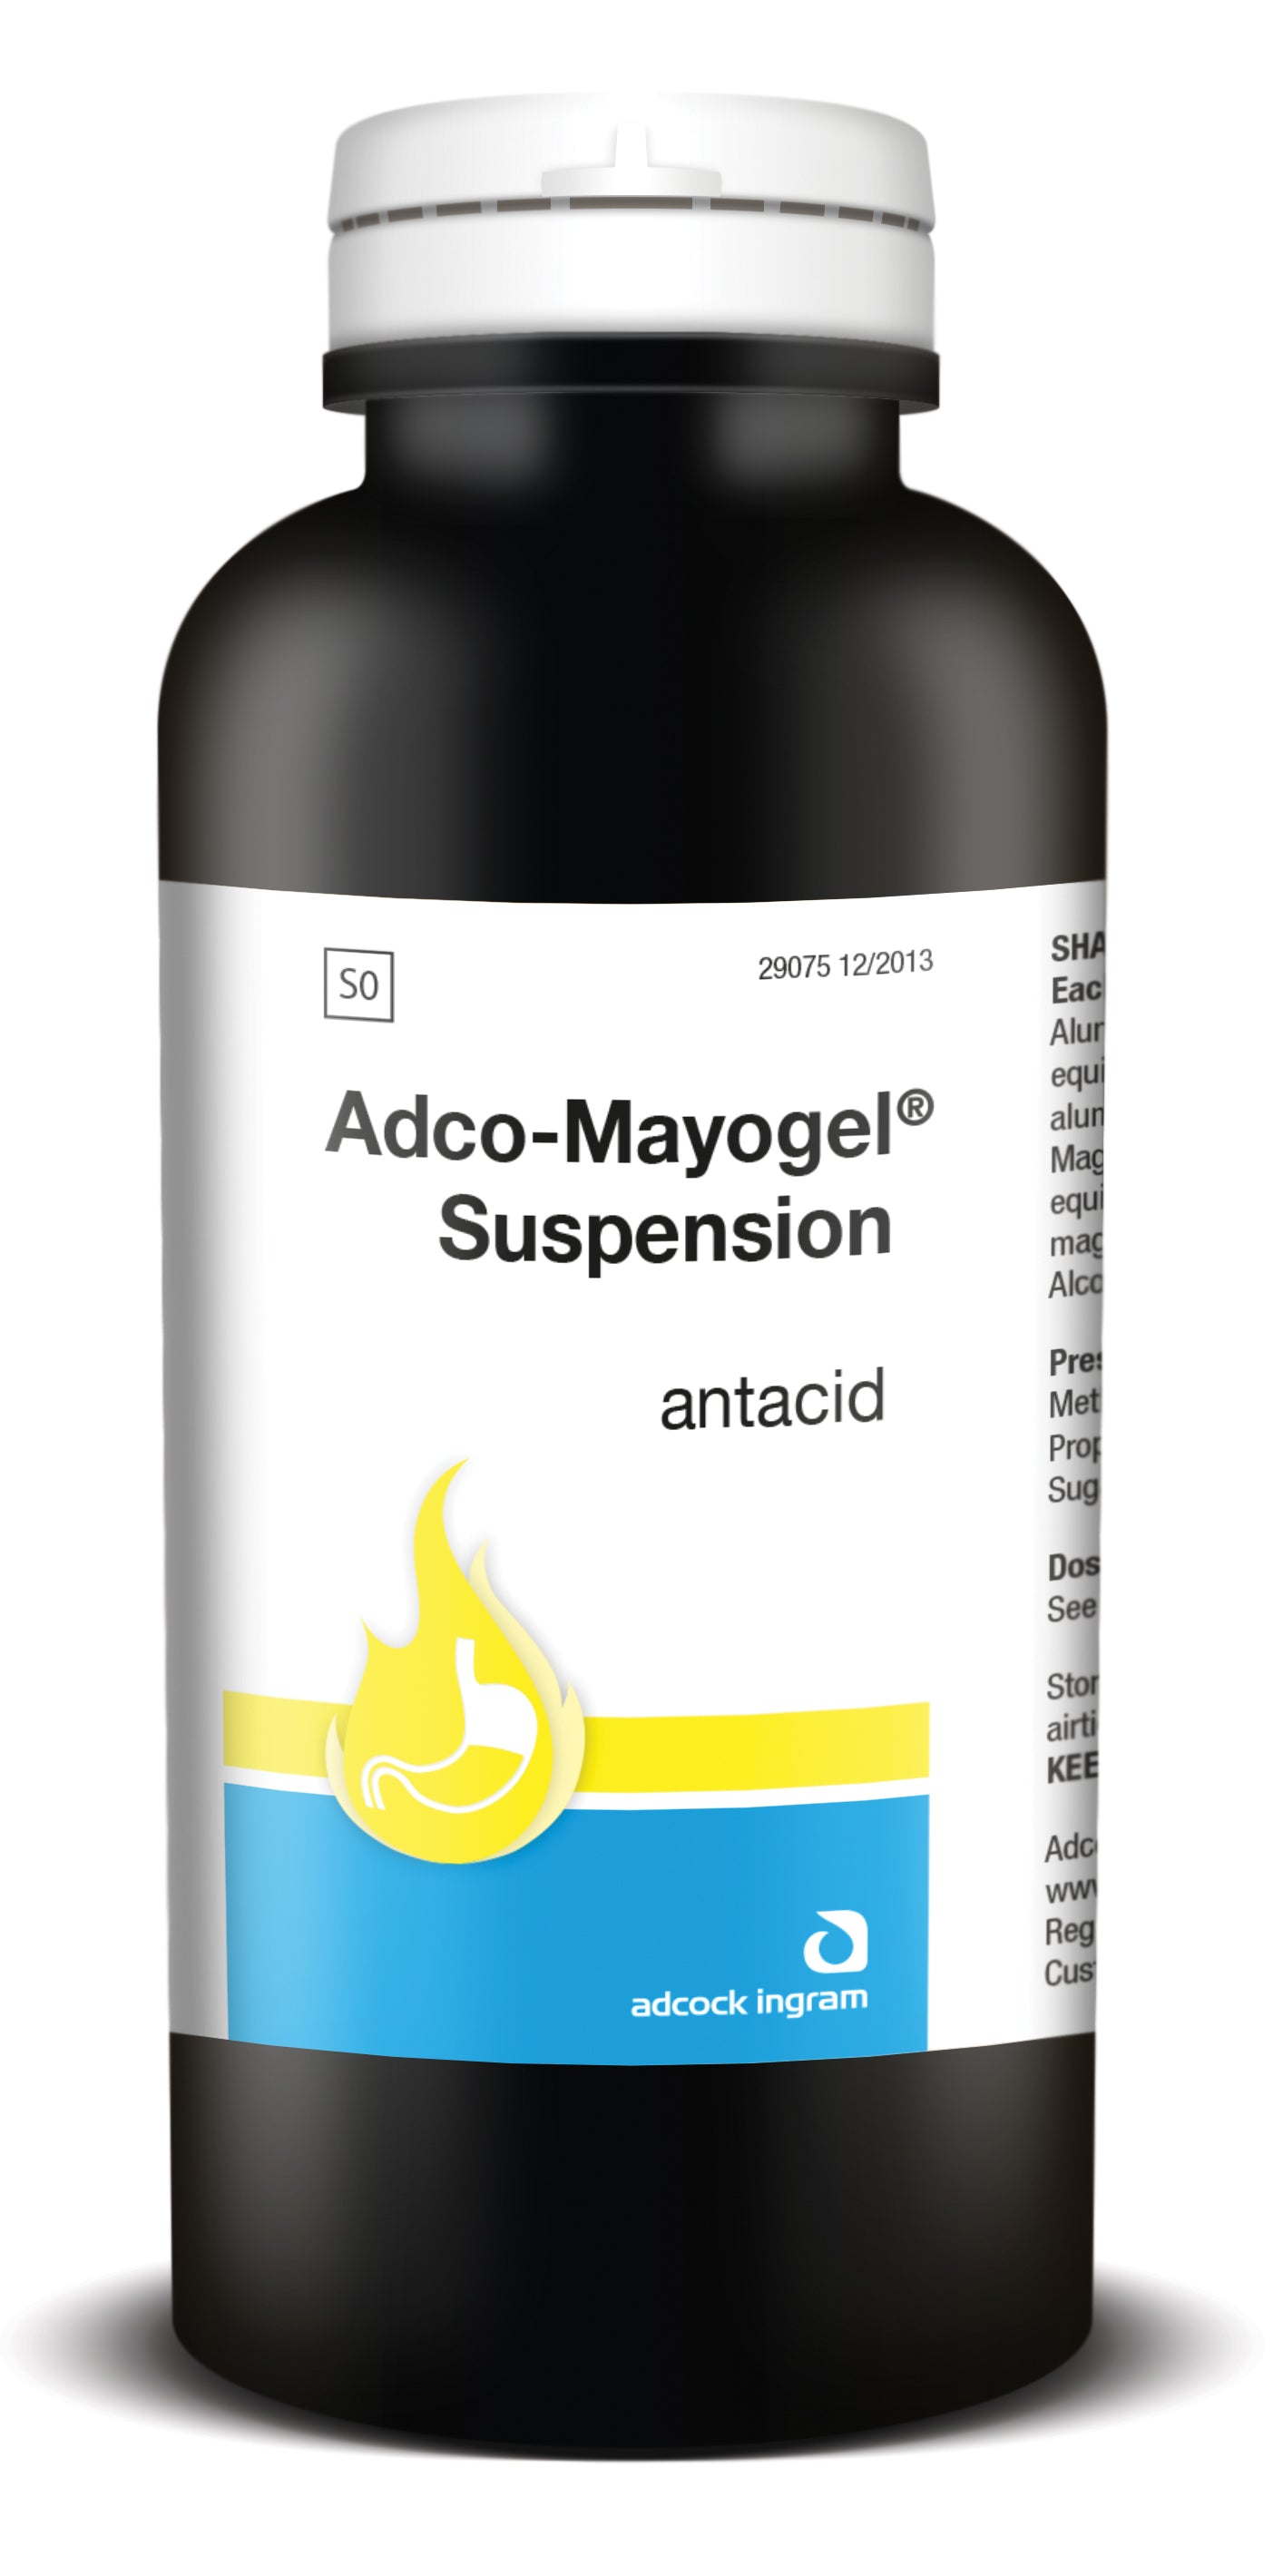 Adco-Mayogel Suspension